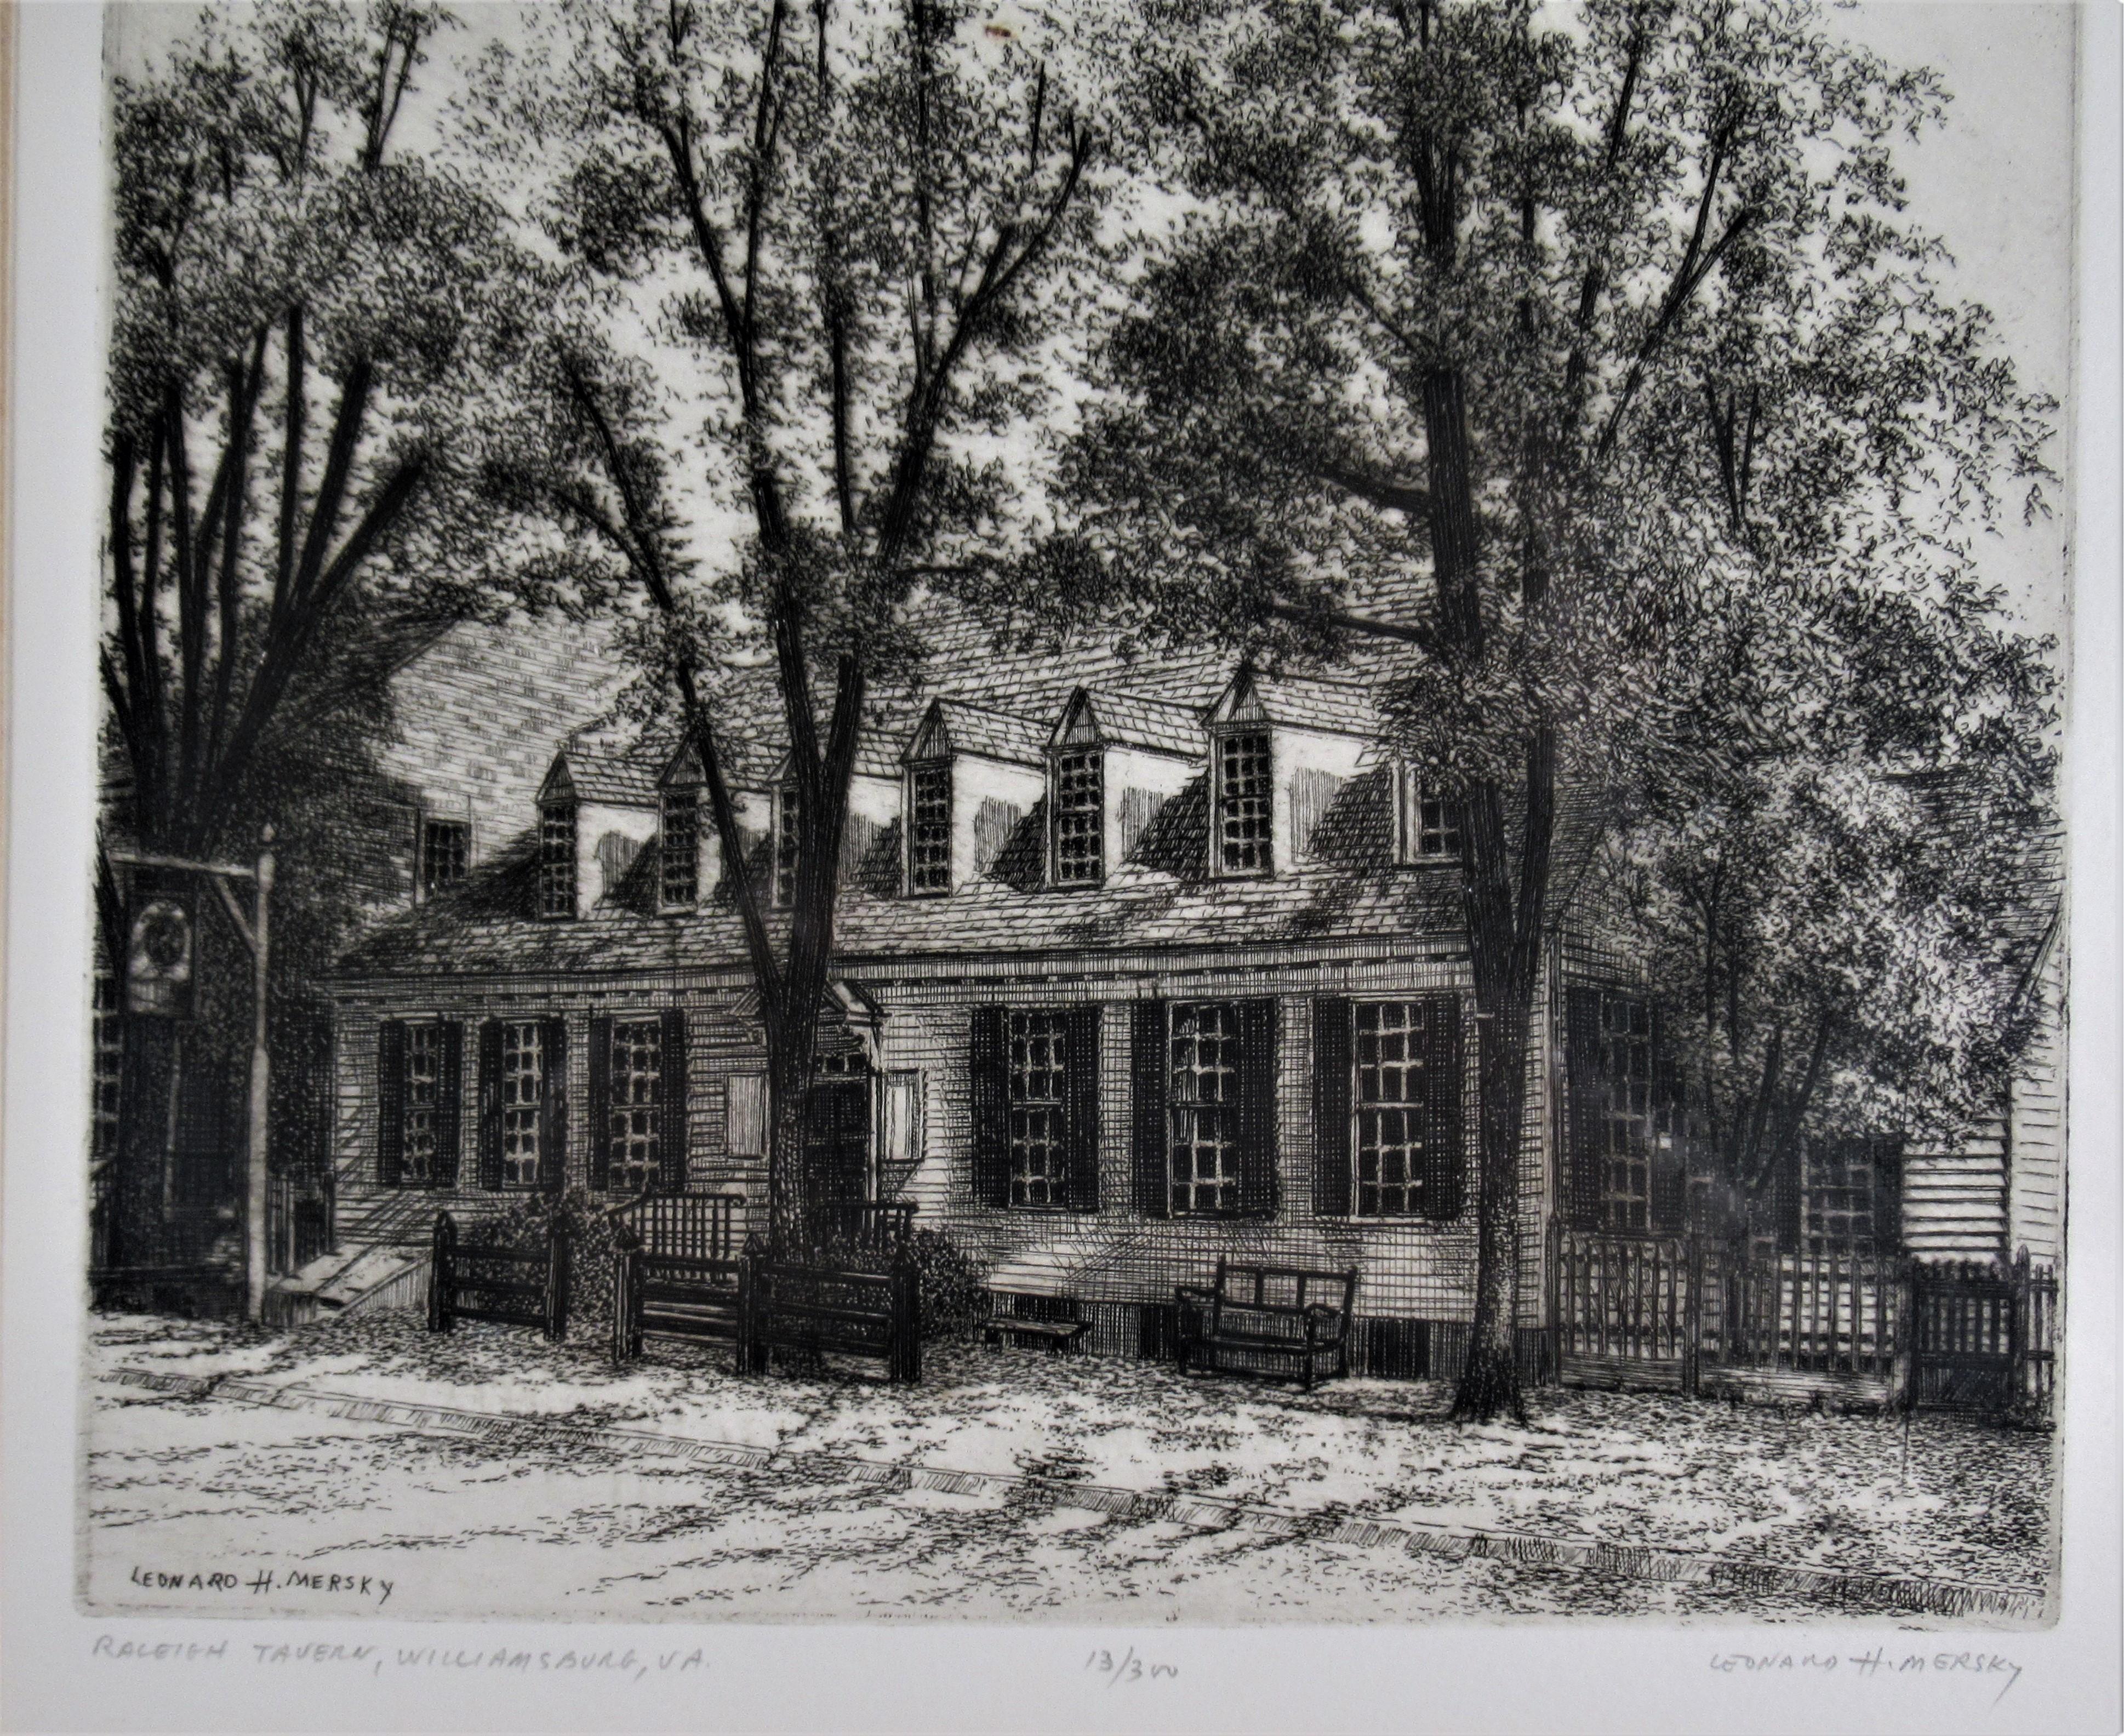 Raleigh Tavern, Williamsburg, VA (Grau), Figurative Print, von Leonard H. Mersky